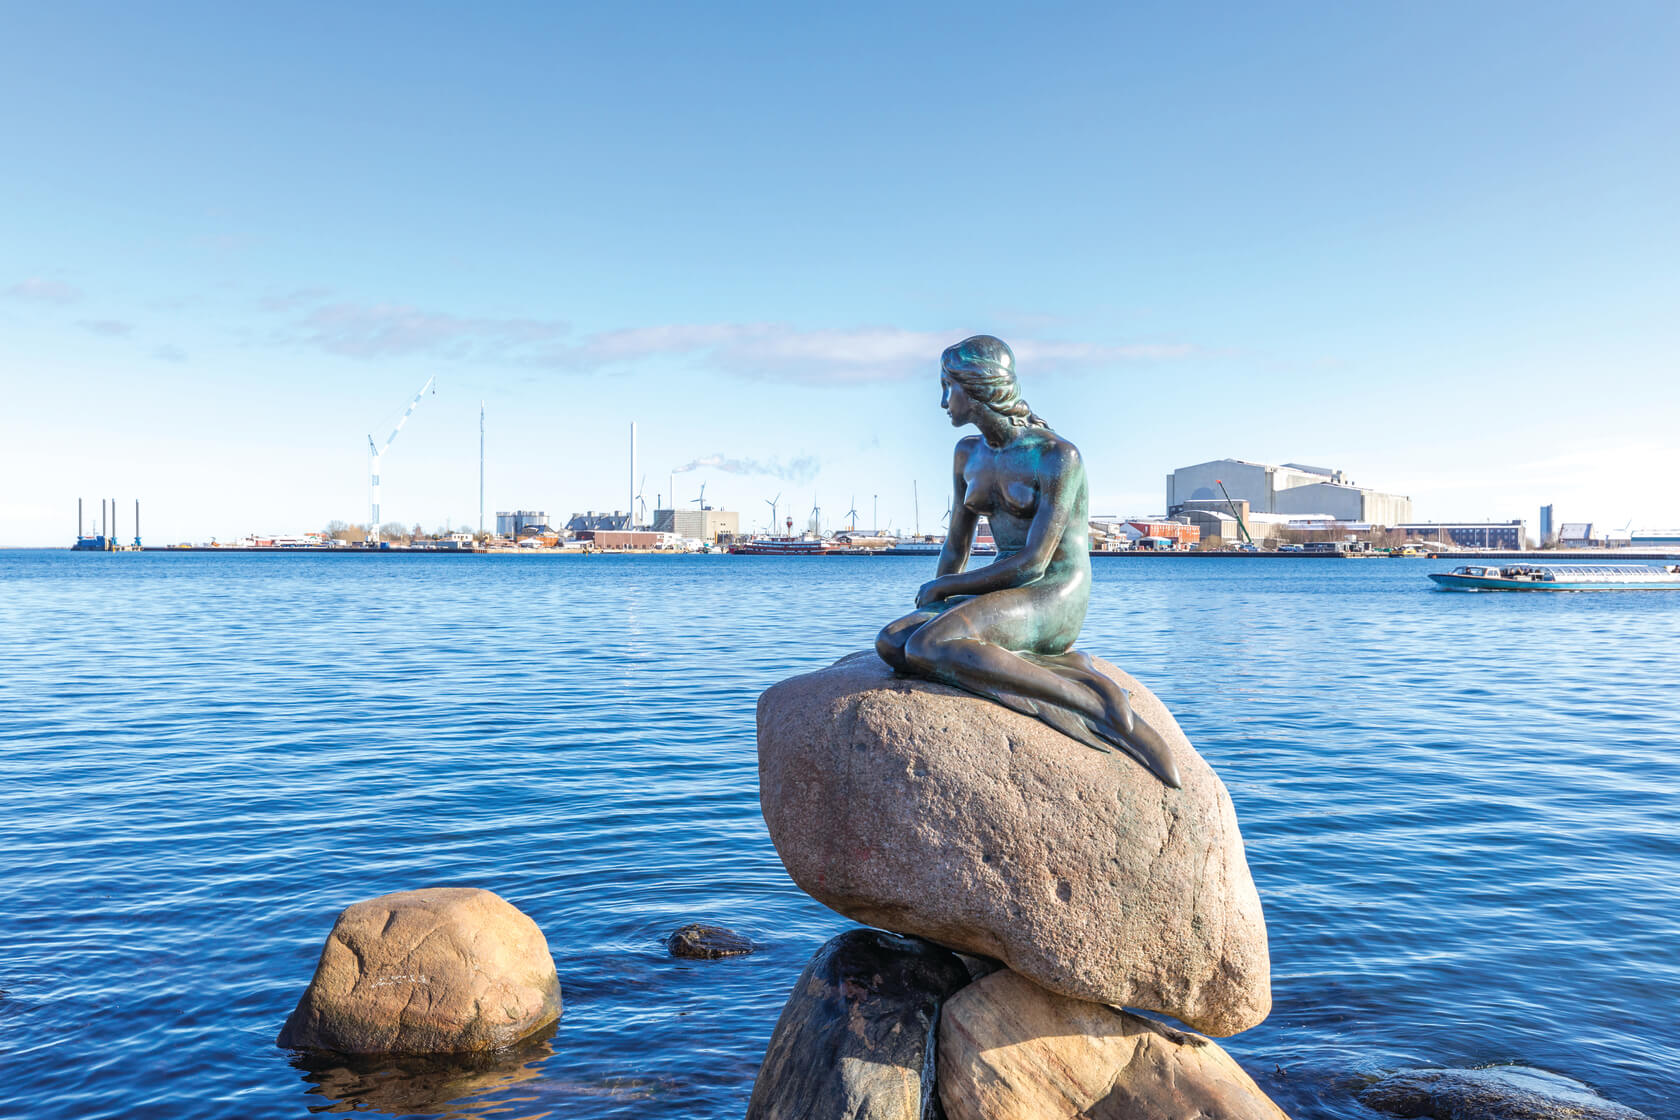 An iron sculpture of a mermaid resting on a rock overlooking the Copenhagen bay